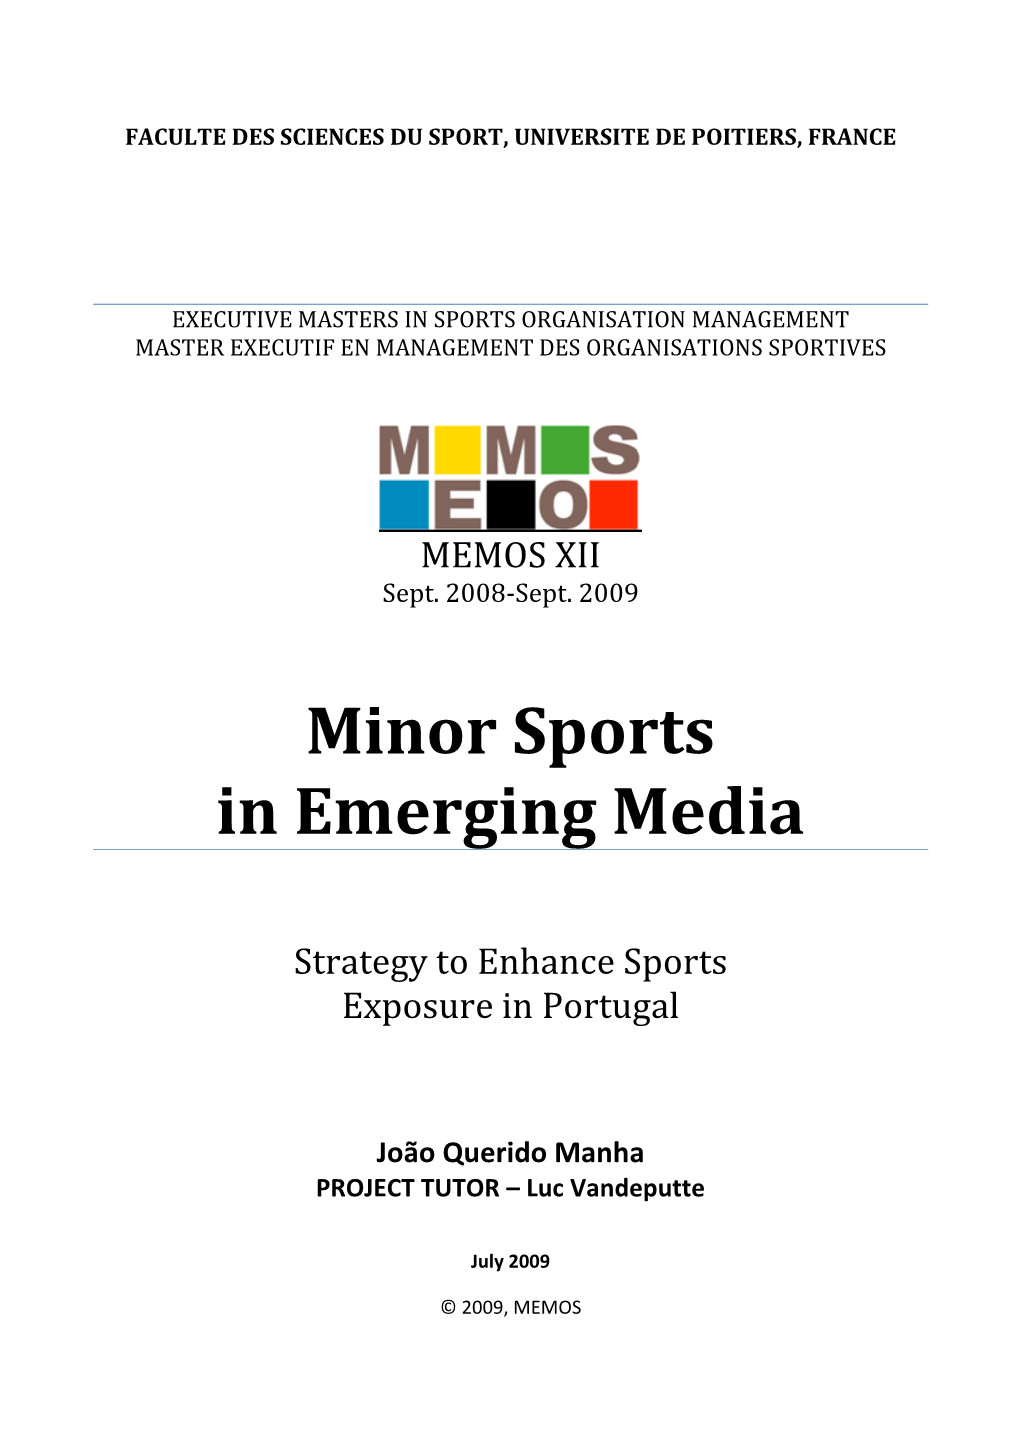 Minor Sports in Emerging Media